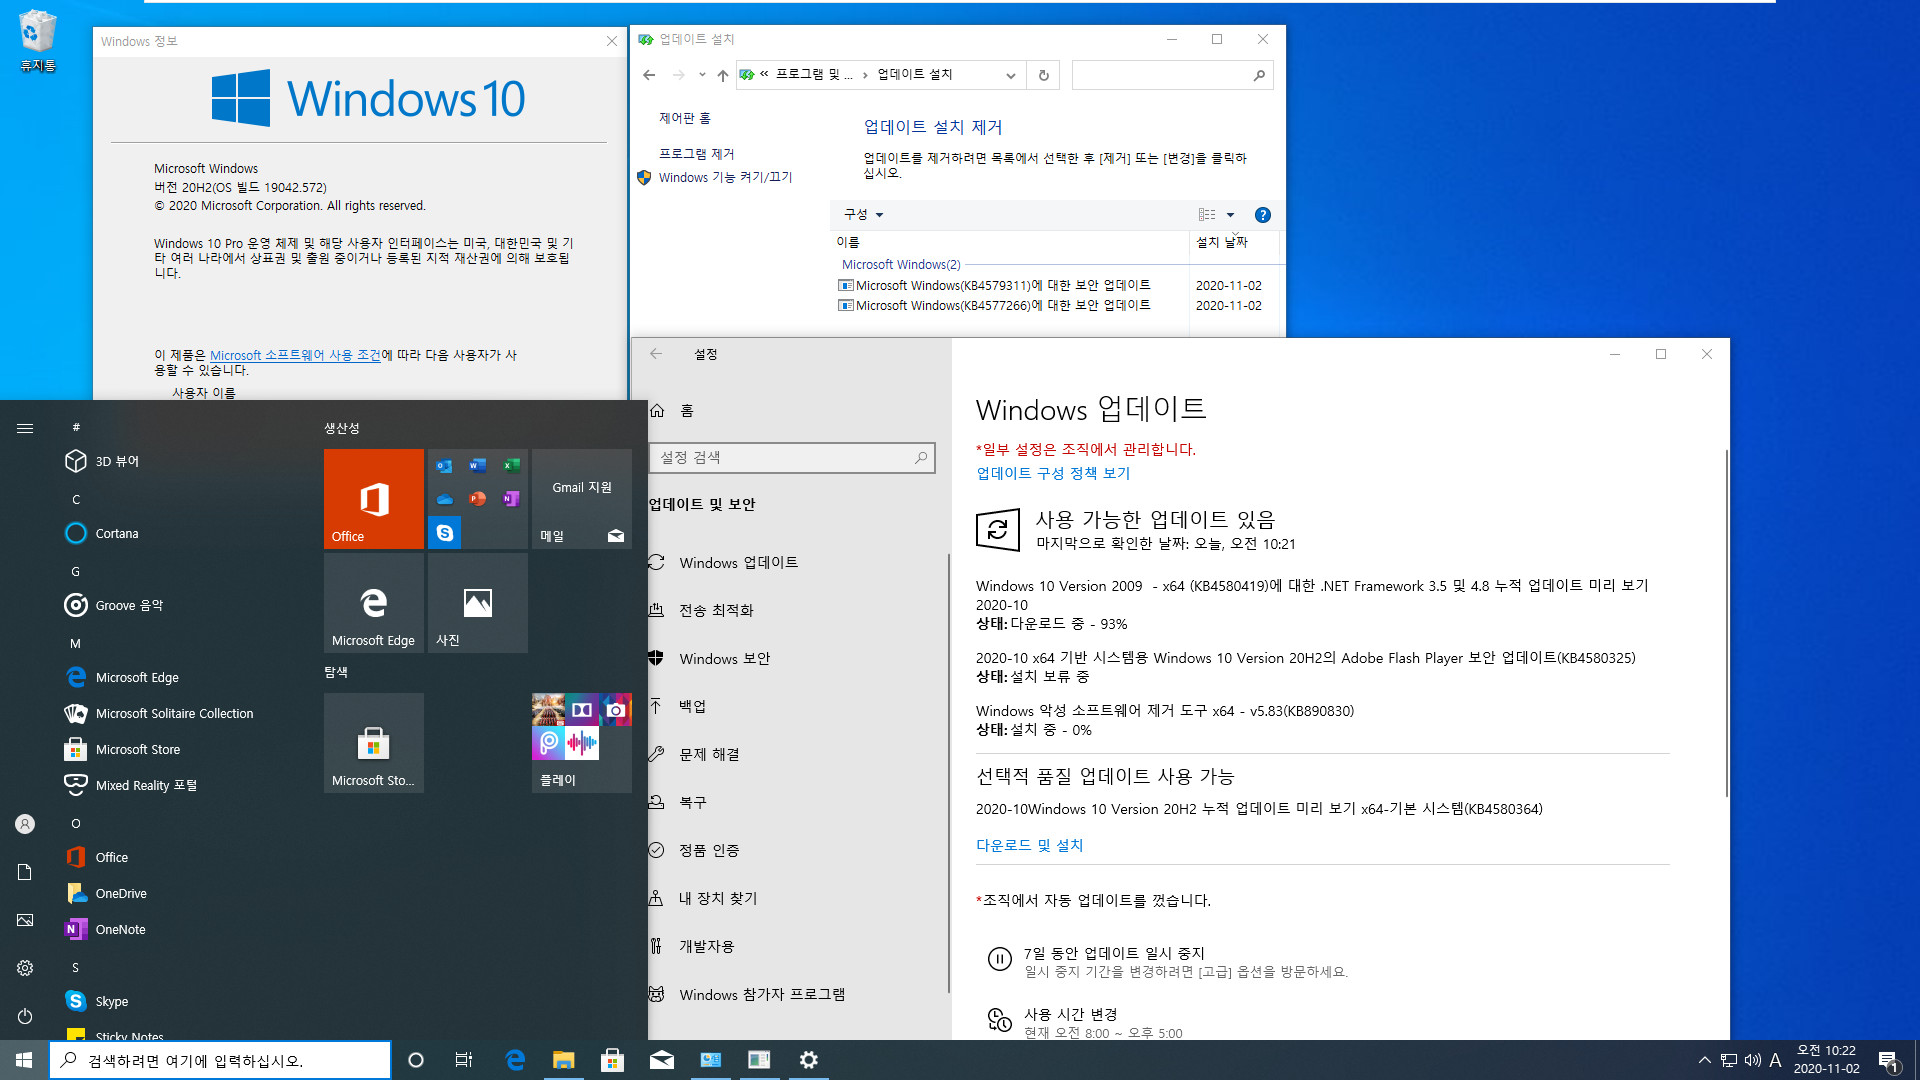 Windows 10 버전 20H2 기능 업데이트 KB4562830 폴더의 mum 파일들만 찾아서 설치하기.bat - 크로미엄 엣지 설치하지 않고 버전 20H2만 설치하기 테스트 - 뻘짓했네요 2020-11-02_102217.jpg